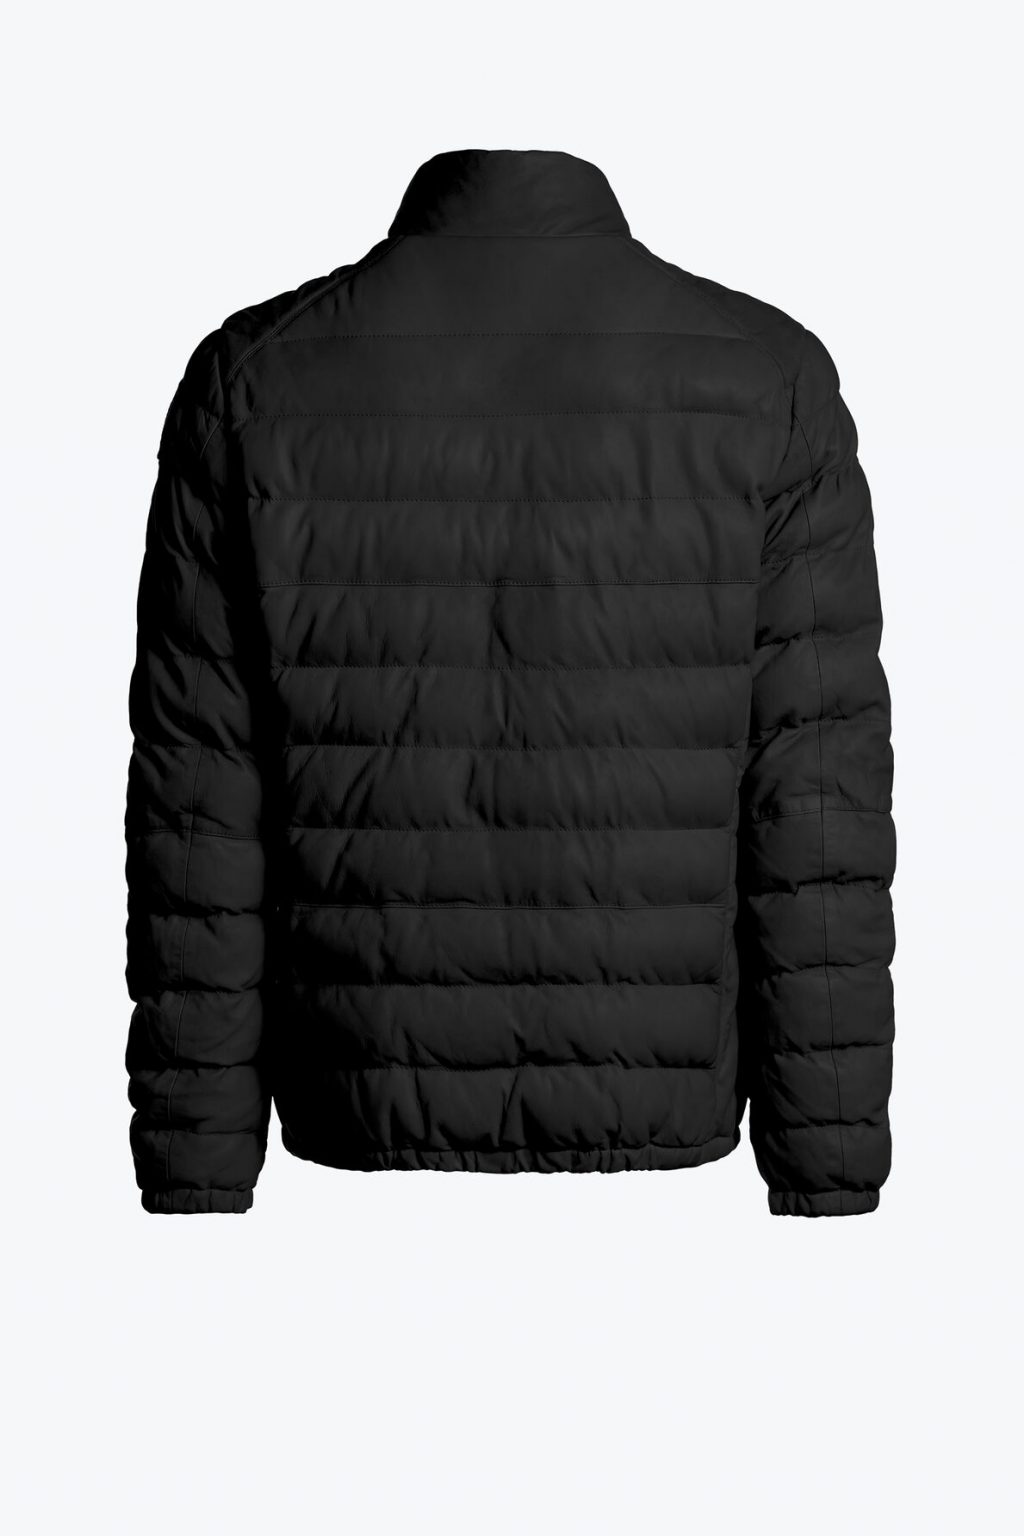 Buy Parajumpers Ernie Leather Jacket Black - Scandinavian Fashion Store